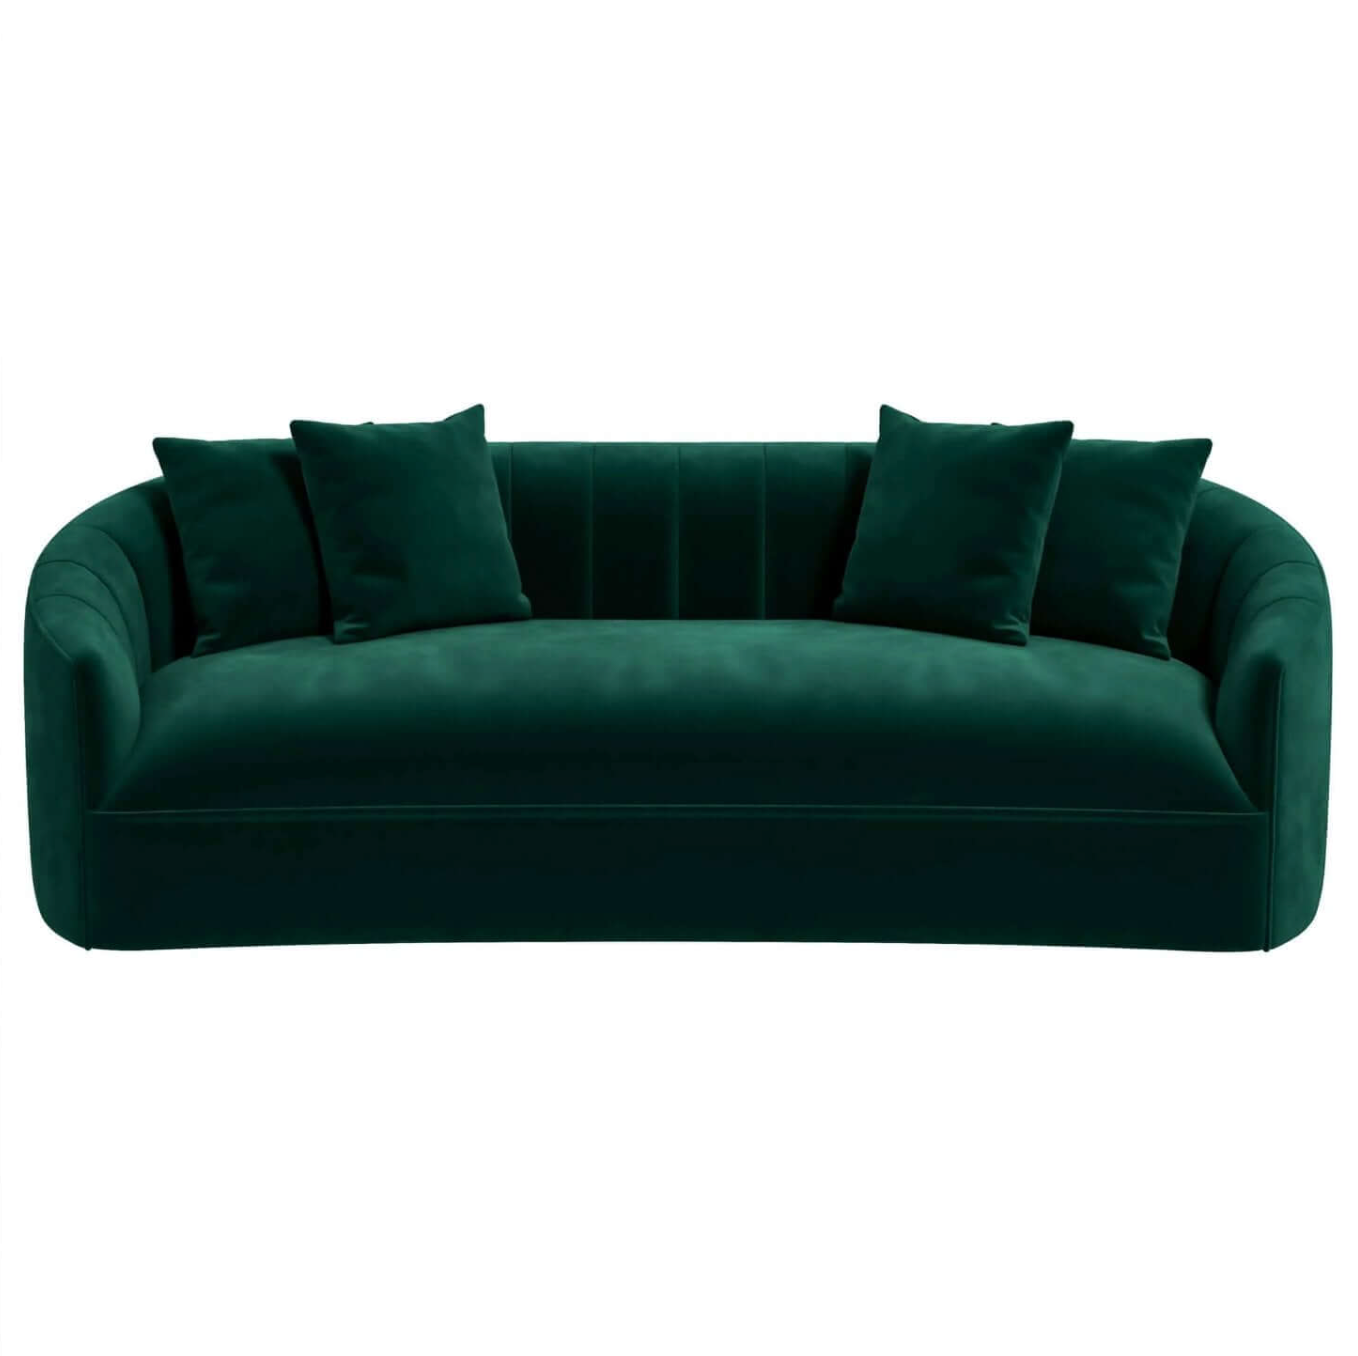 Kante Curved Channel Tufted Velvet Sofa in Green 88”